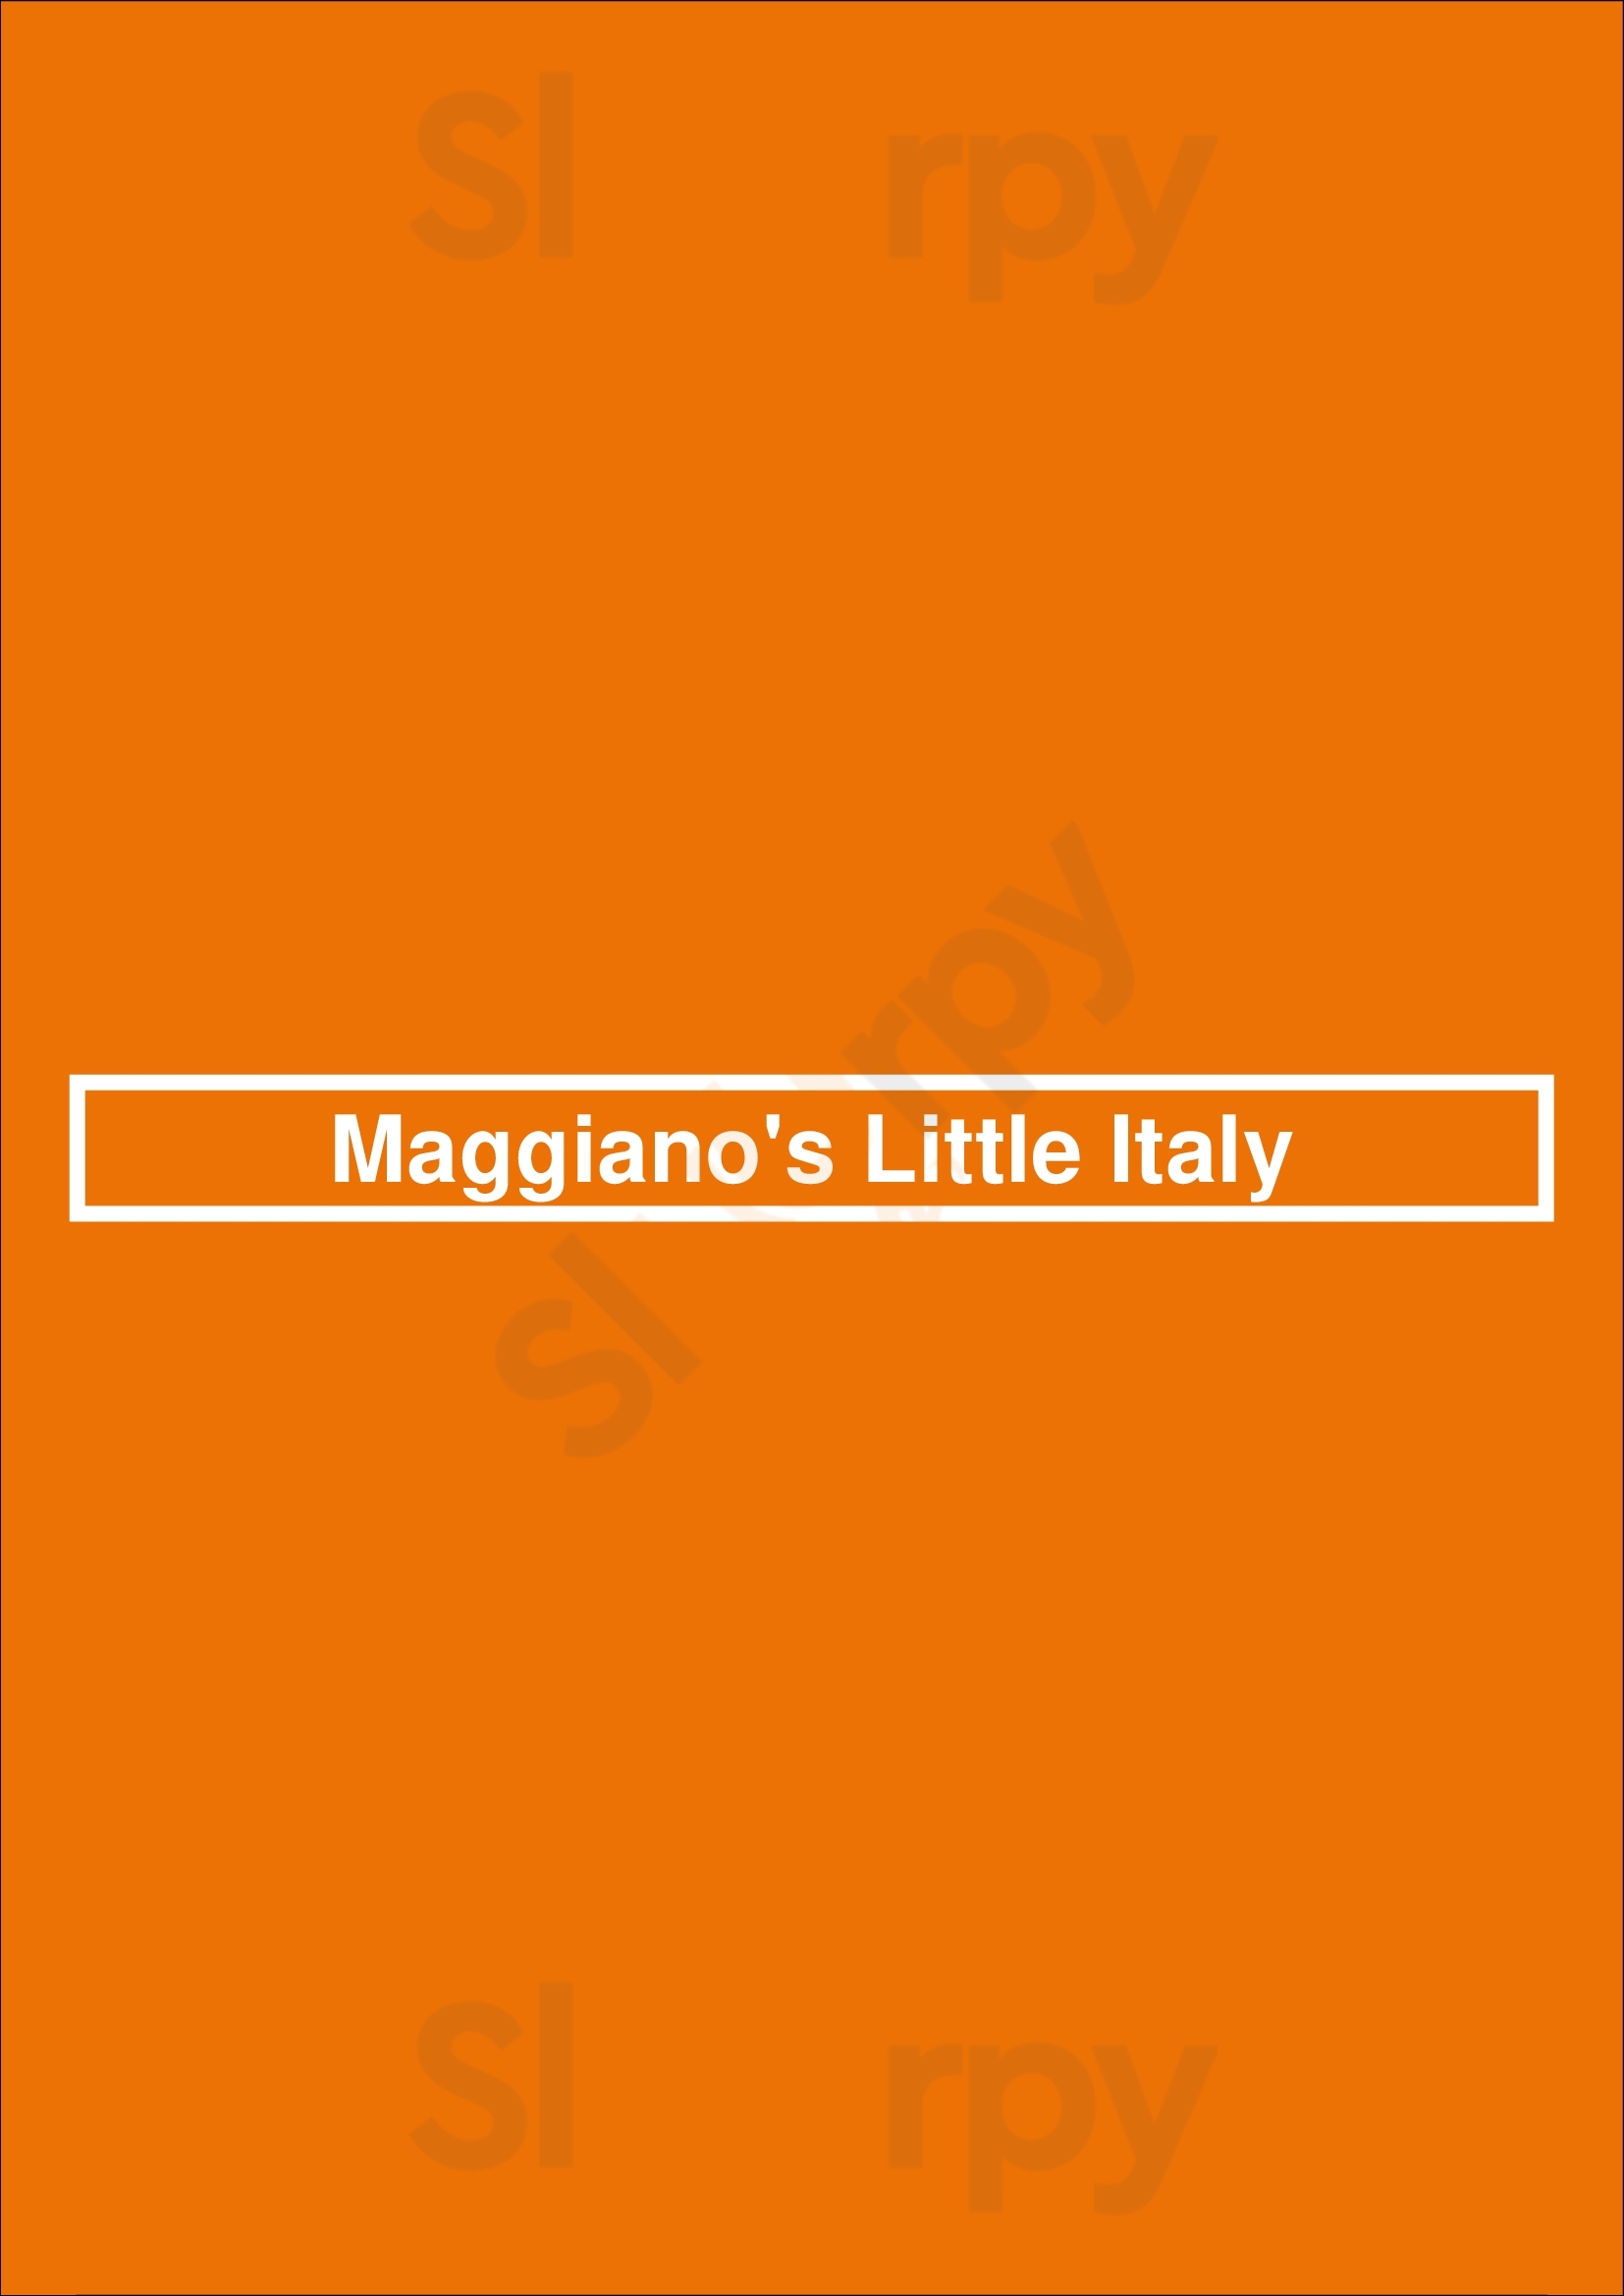 Maggiano's Little Italy Denver Menu - 1